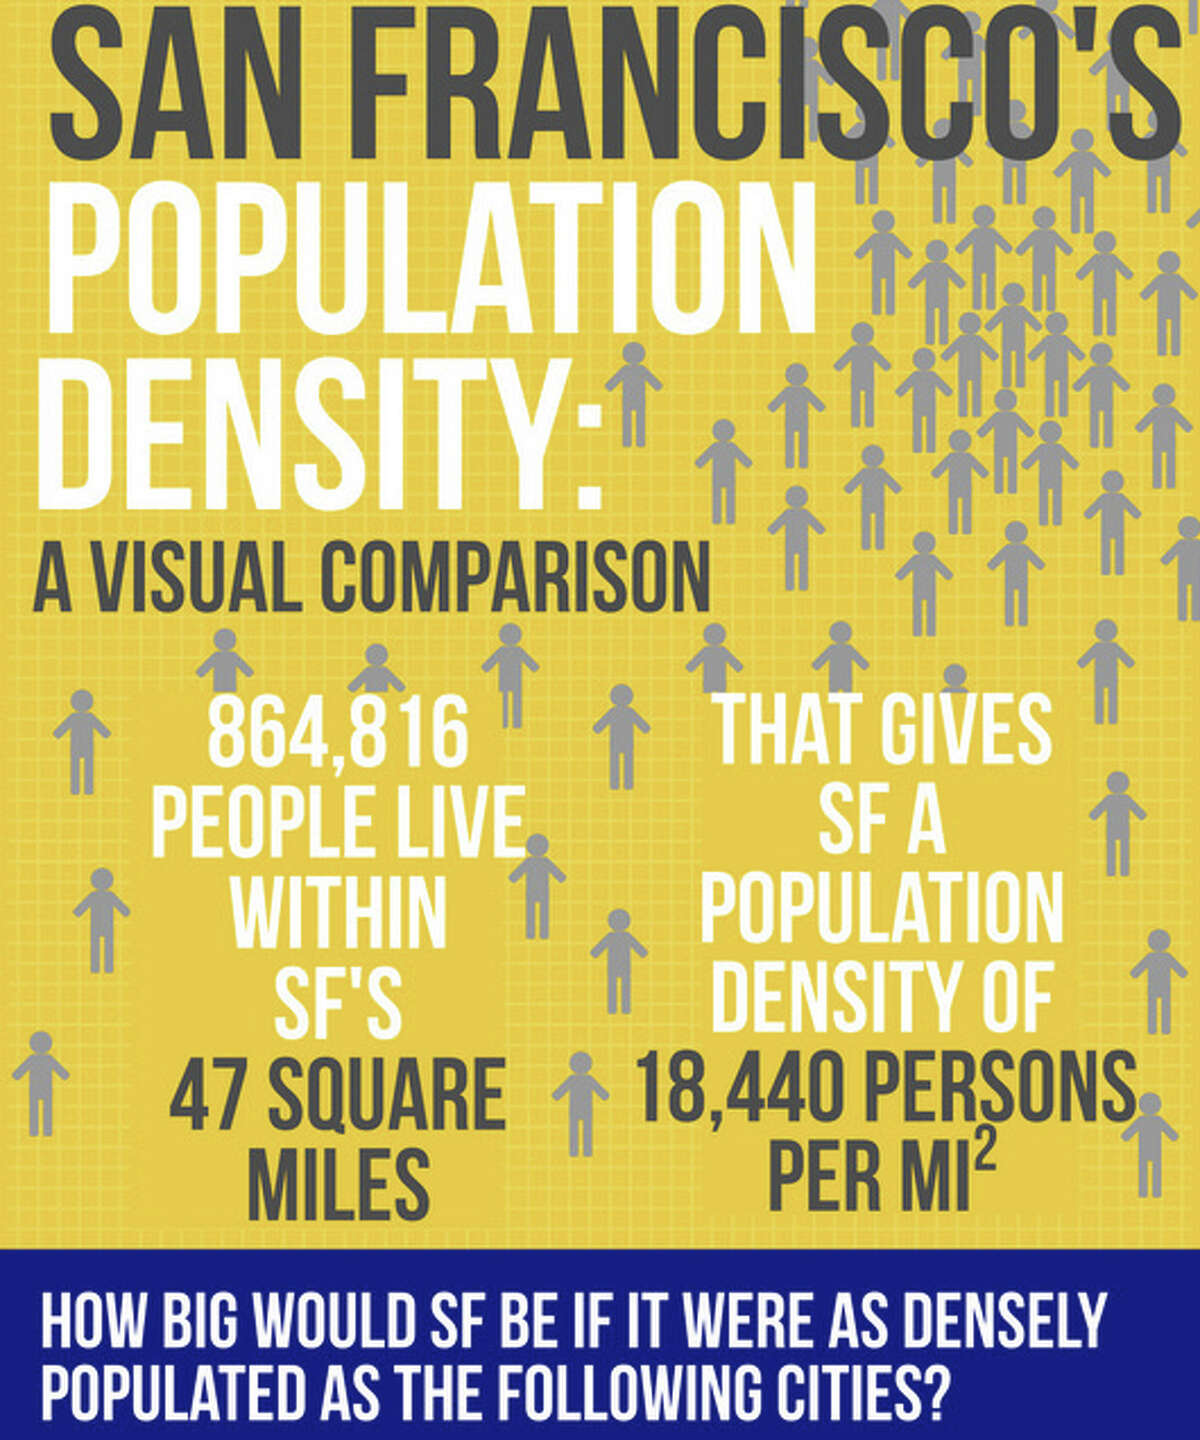 San Francisco's population density A visual comparison